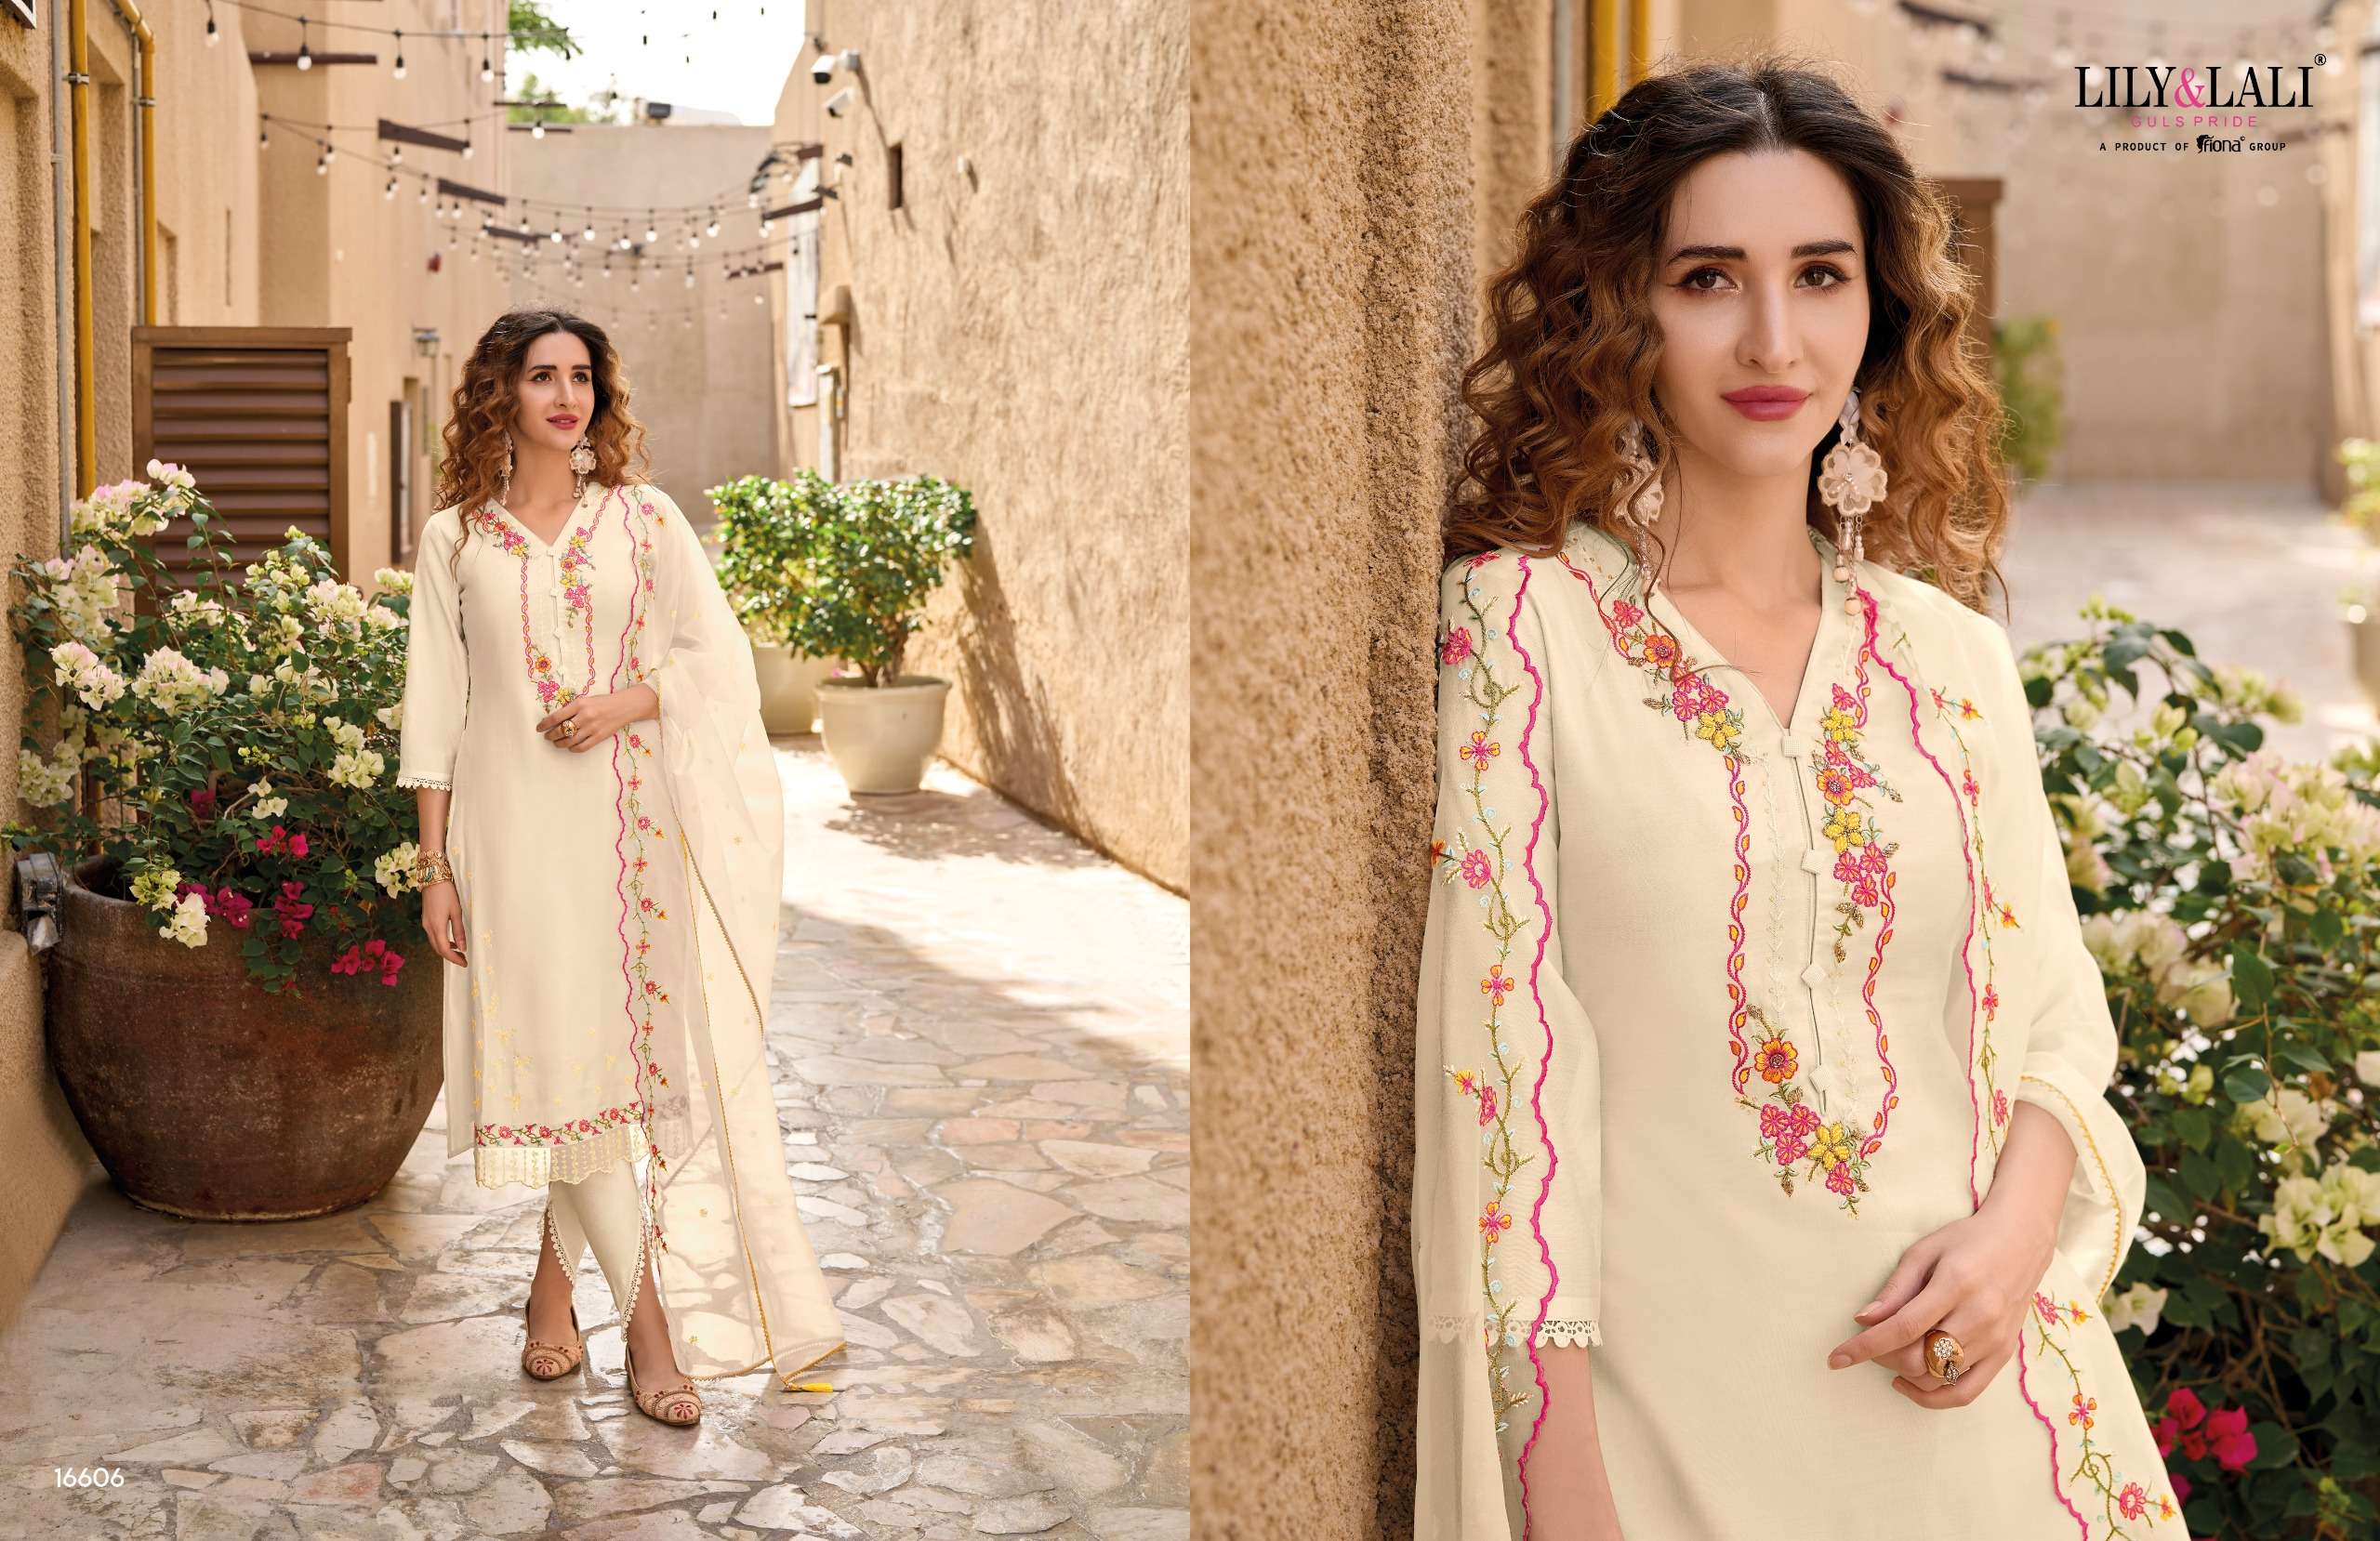 lily and lali miraan silk innovative look kurti  pant with dupatta catalog